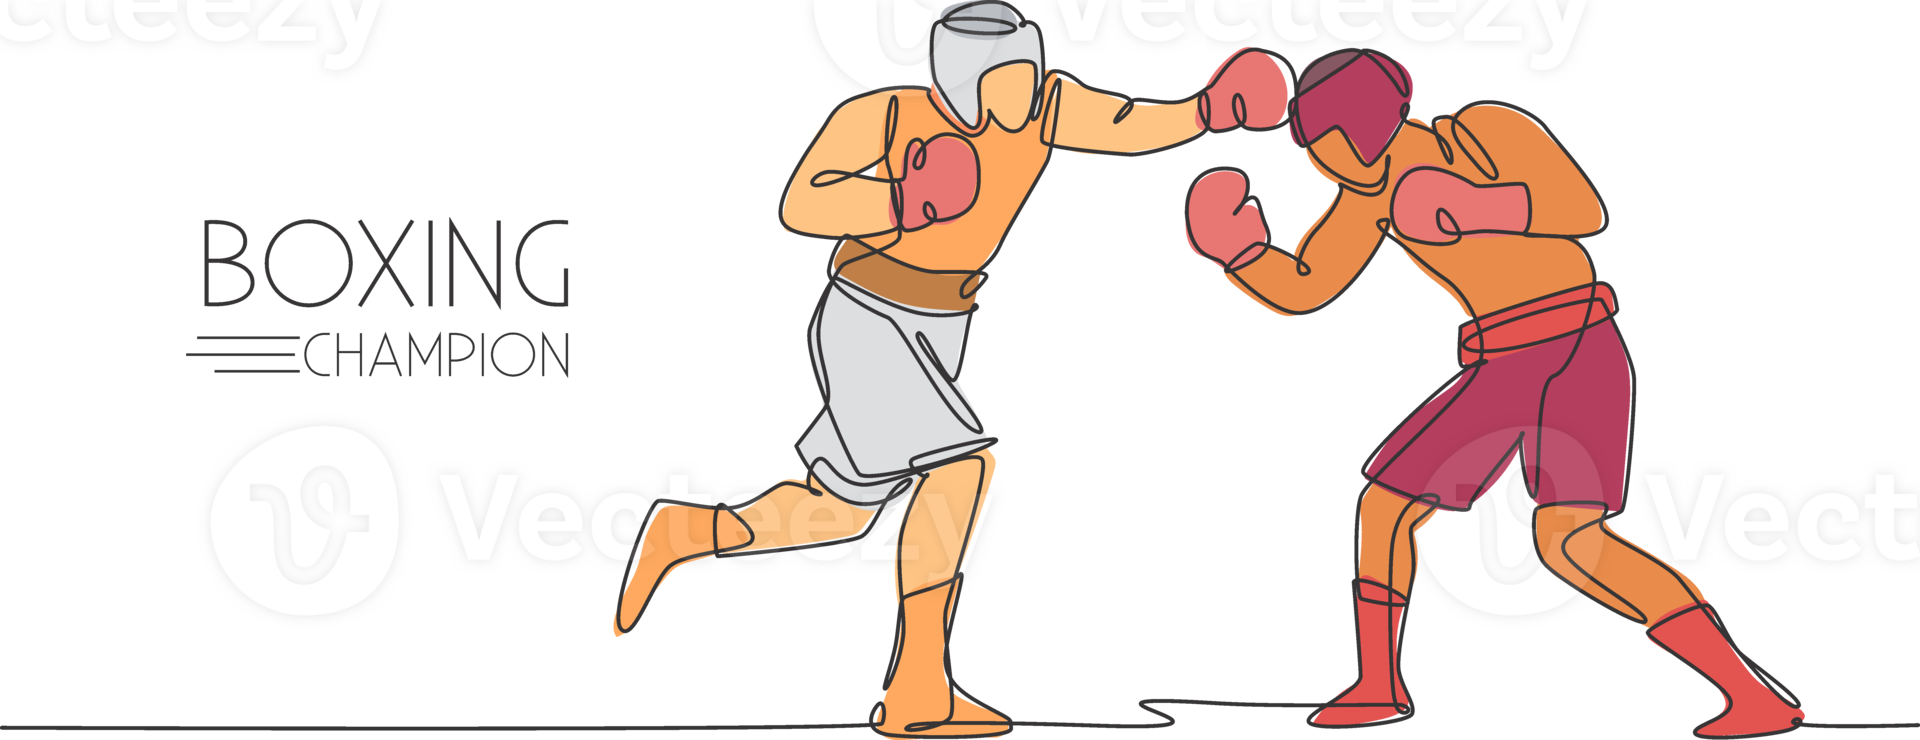 uno continuo línea dibujo de dos joven deportivo hombres Boxer espectáculo emocionante luchar. competitivo combate deporte concepto. dinámica soltero línea dibujar diseño ilustración para boxeo partido promoción póster png